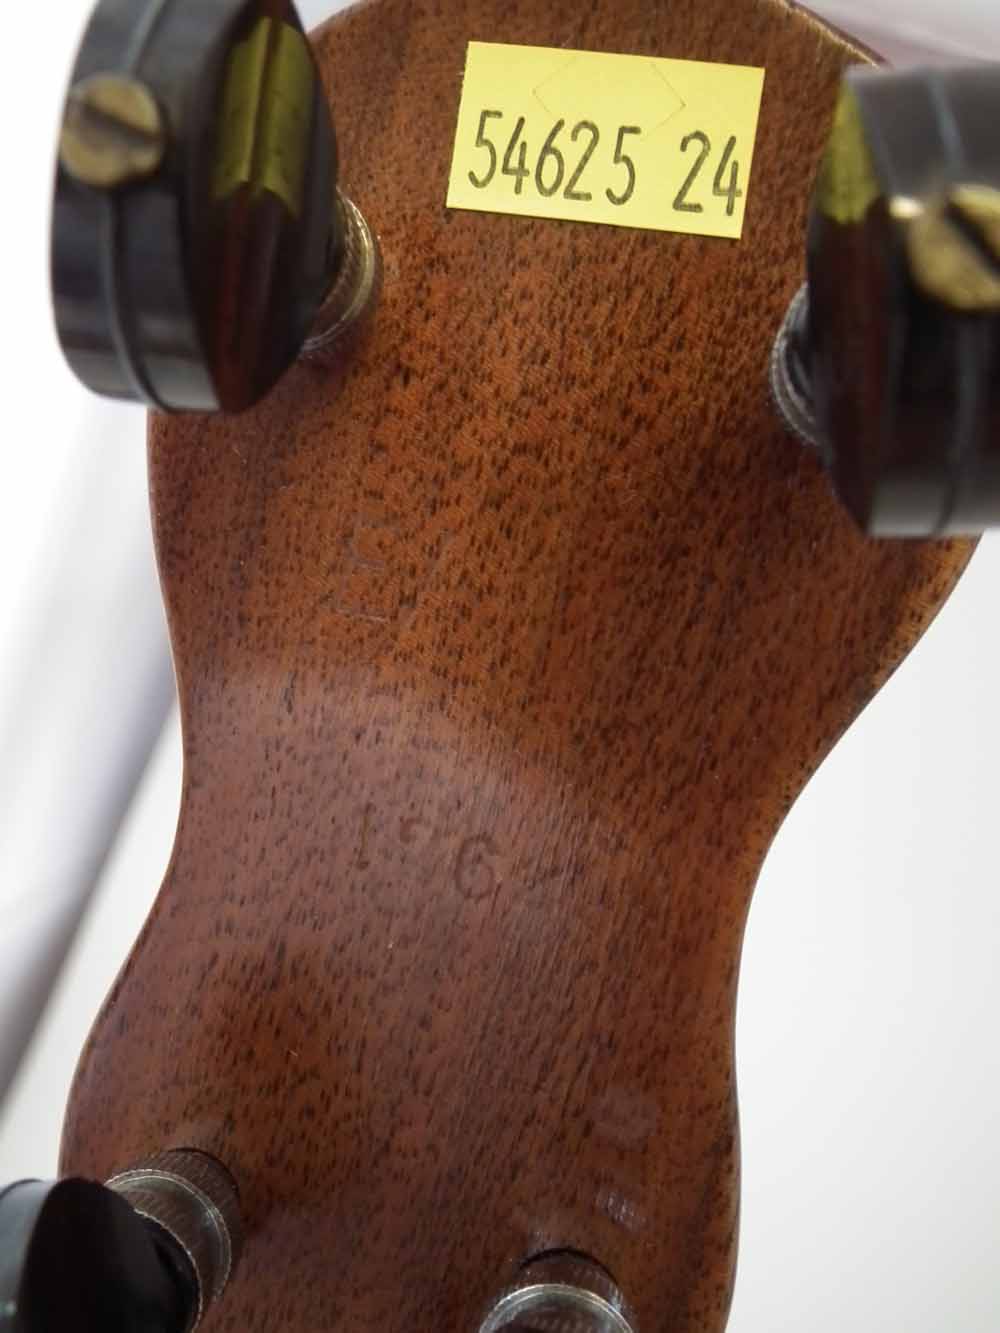 Dallas Model E George Formby Banjolele or Ukulele Banjo, with pearl inlayed headstock and - Image 8 of 11